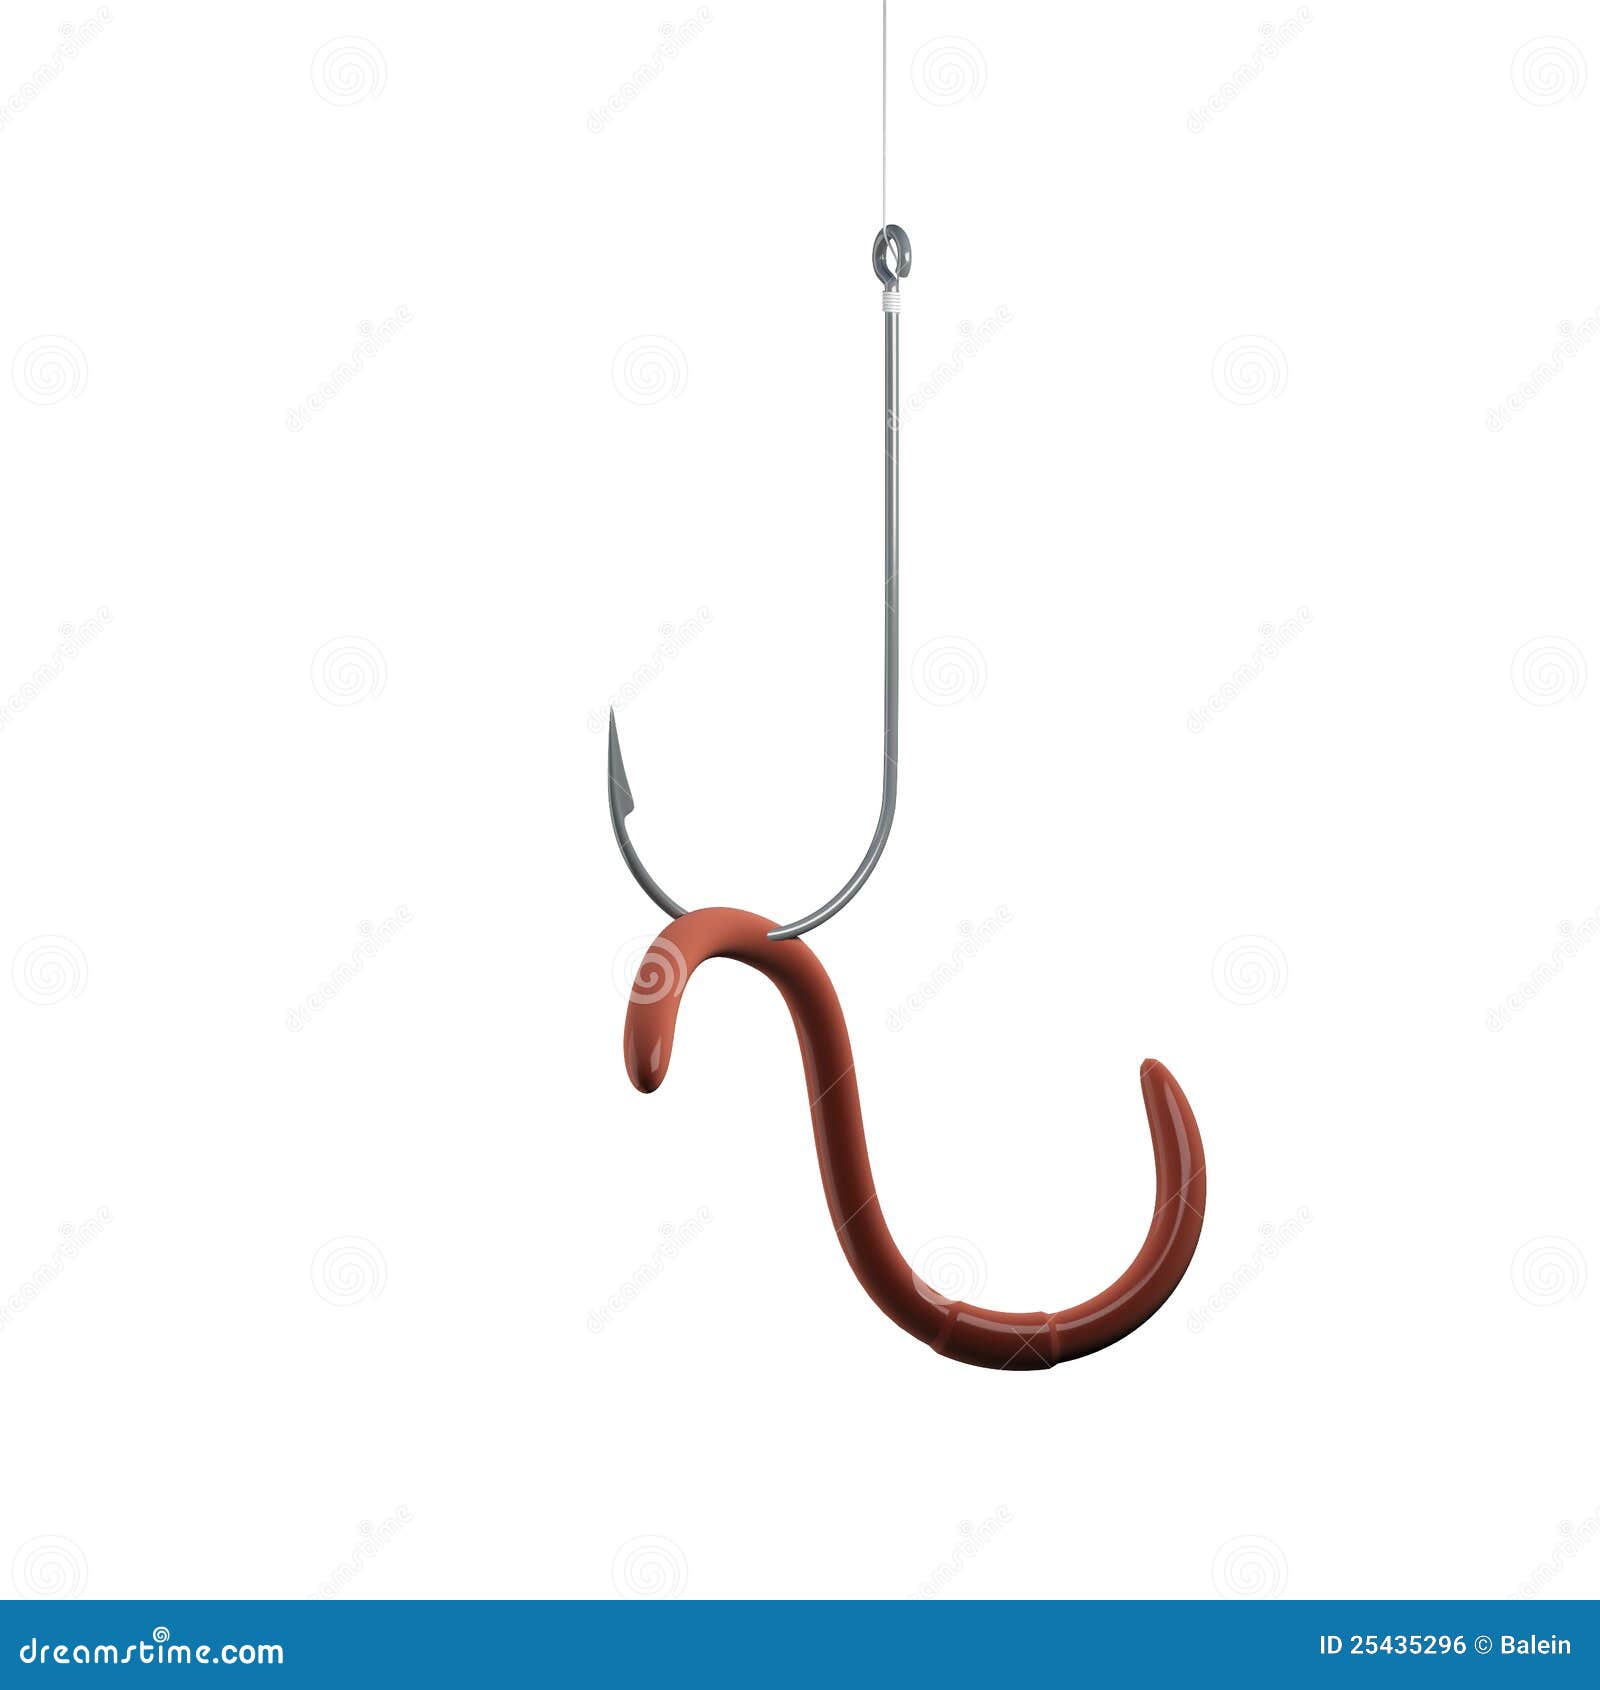 Worm on hook stock illustration. Illustration of emotion - 25435296